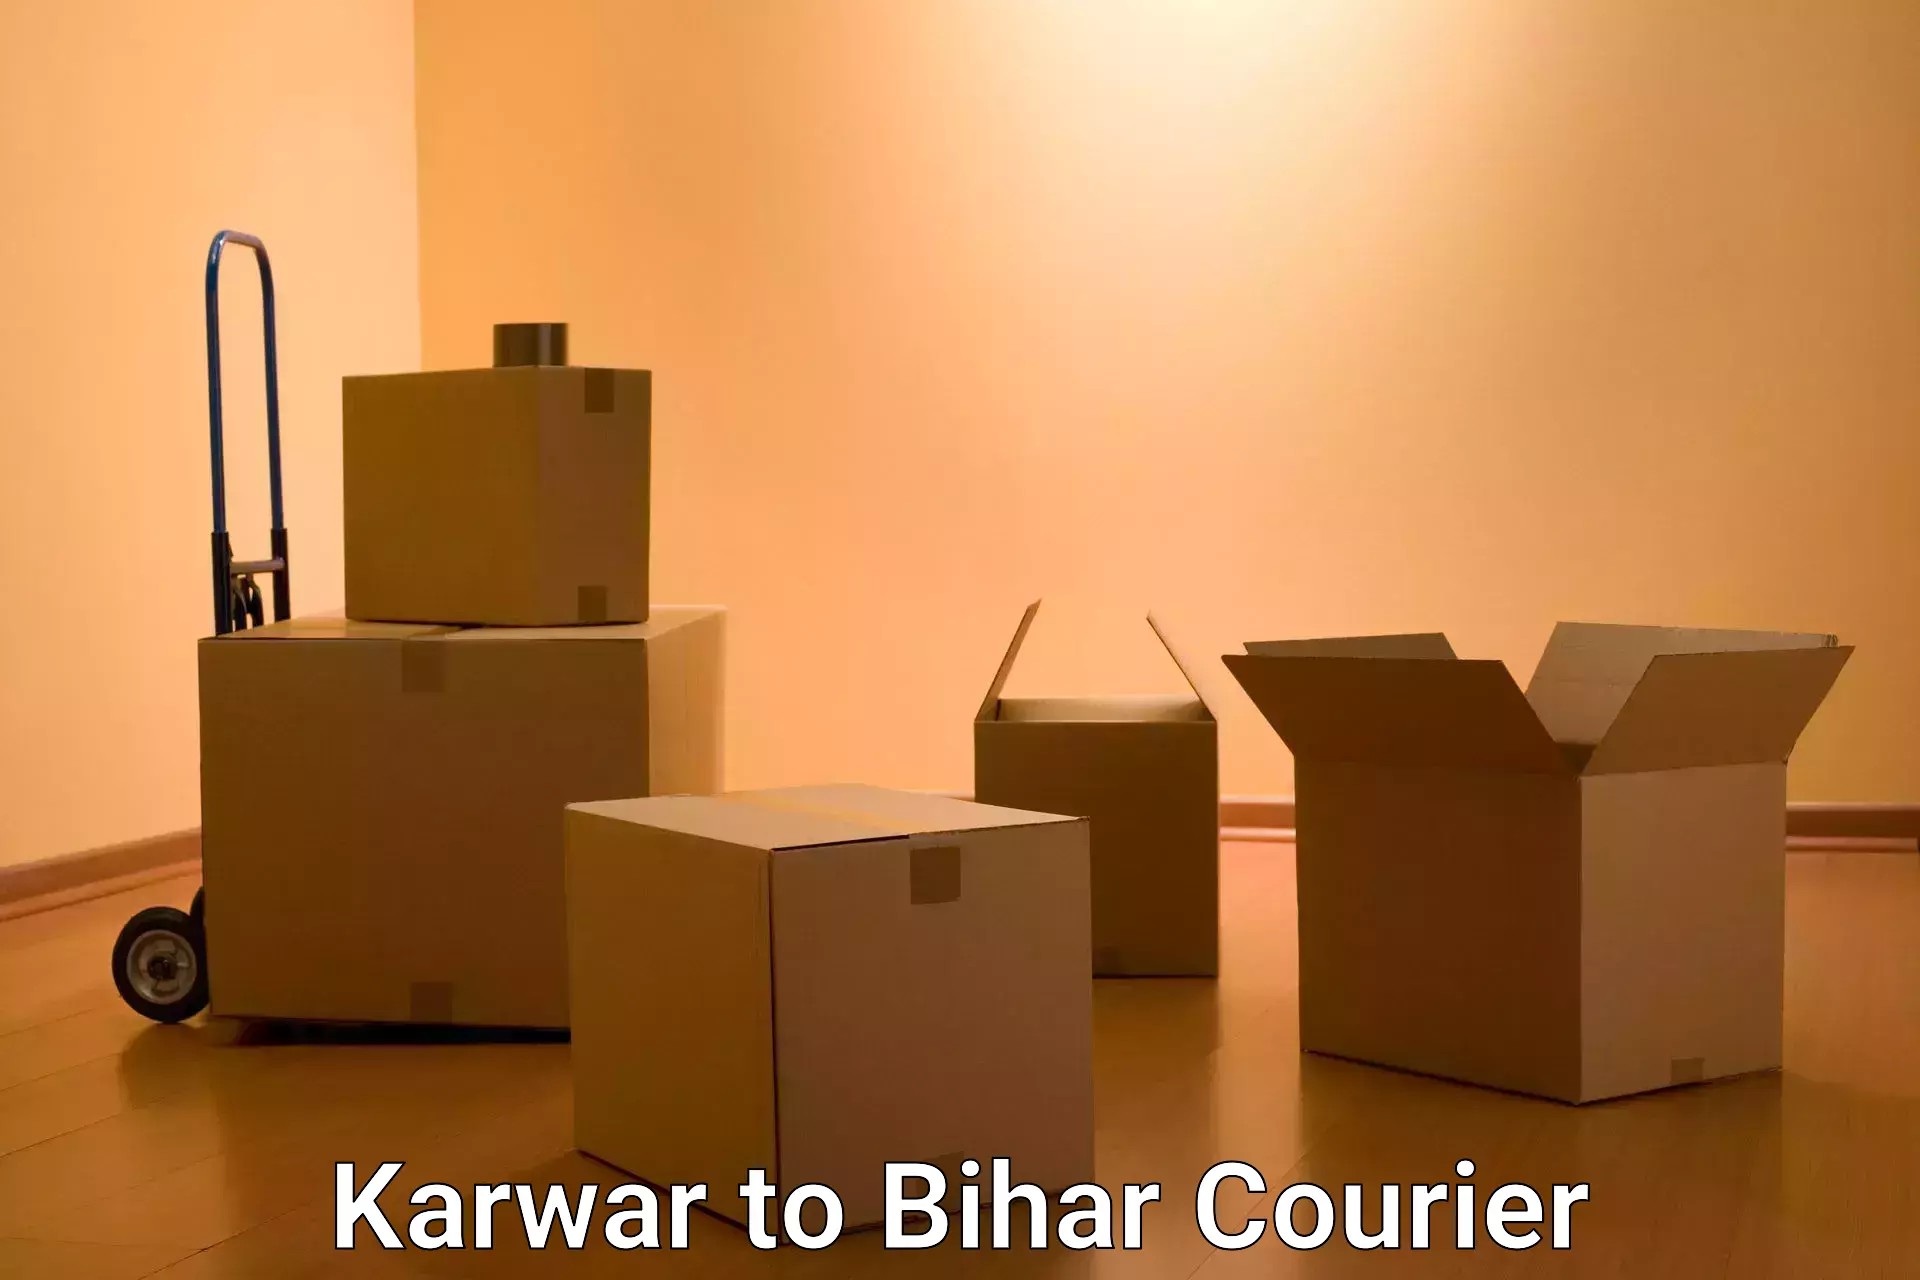 Courier service partnerships Karwar to Aurangabad Bihar